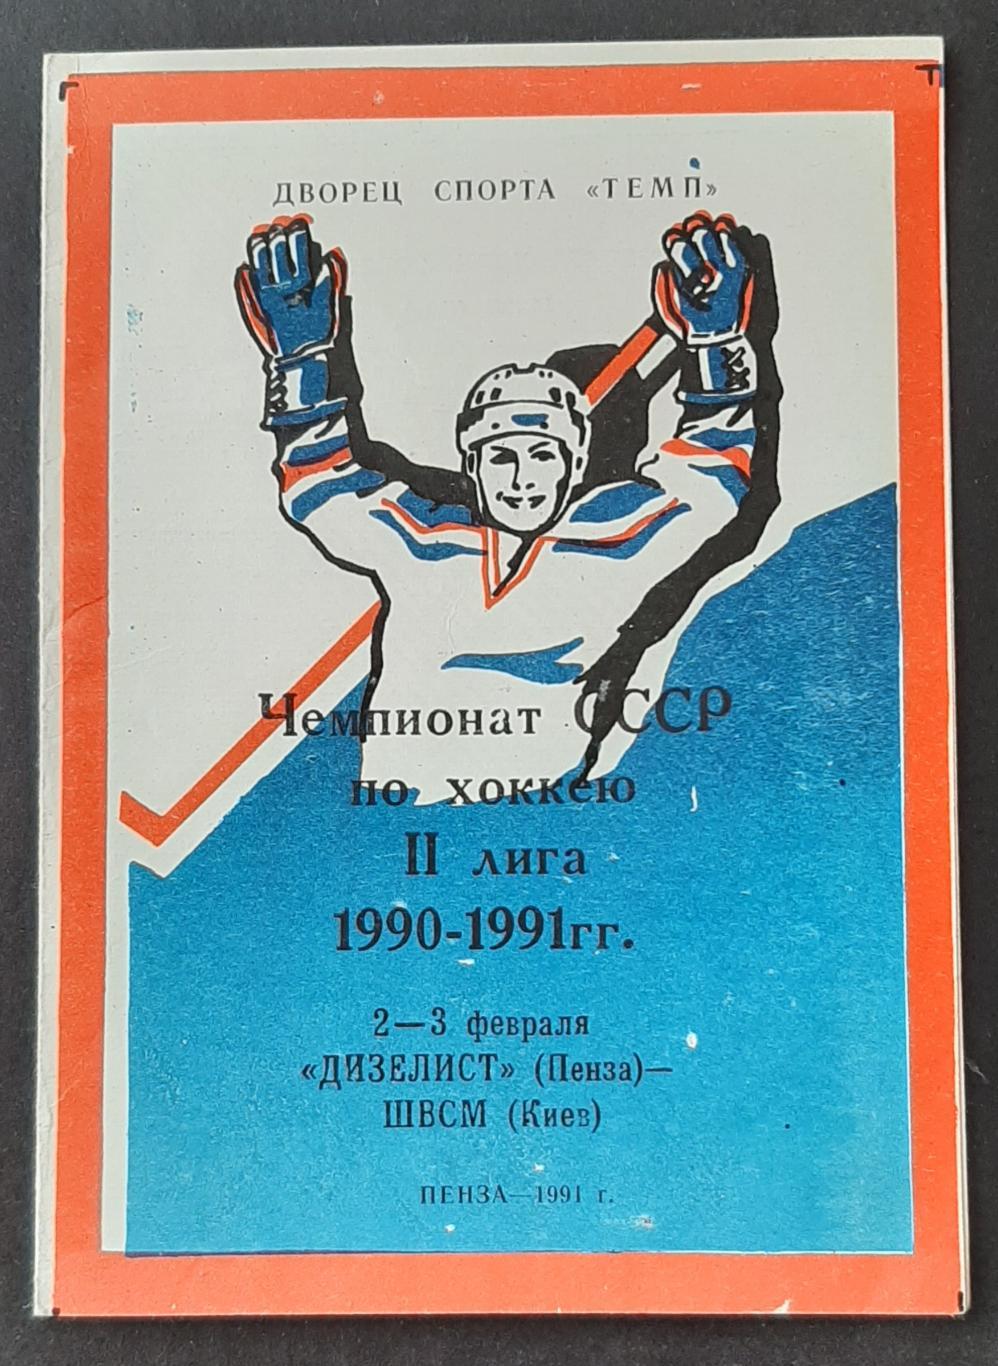 Дизеліст (Пенза) - ШВСМ (Київ) 02-03.02.1991